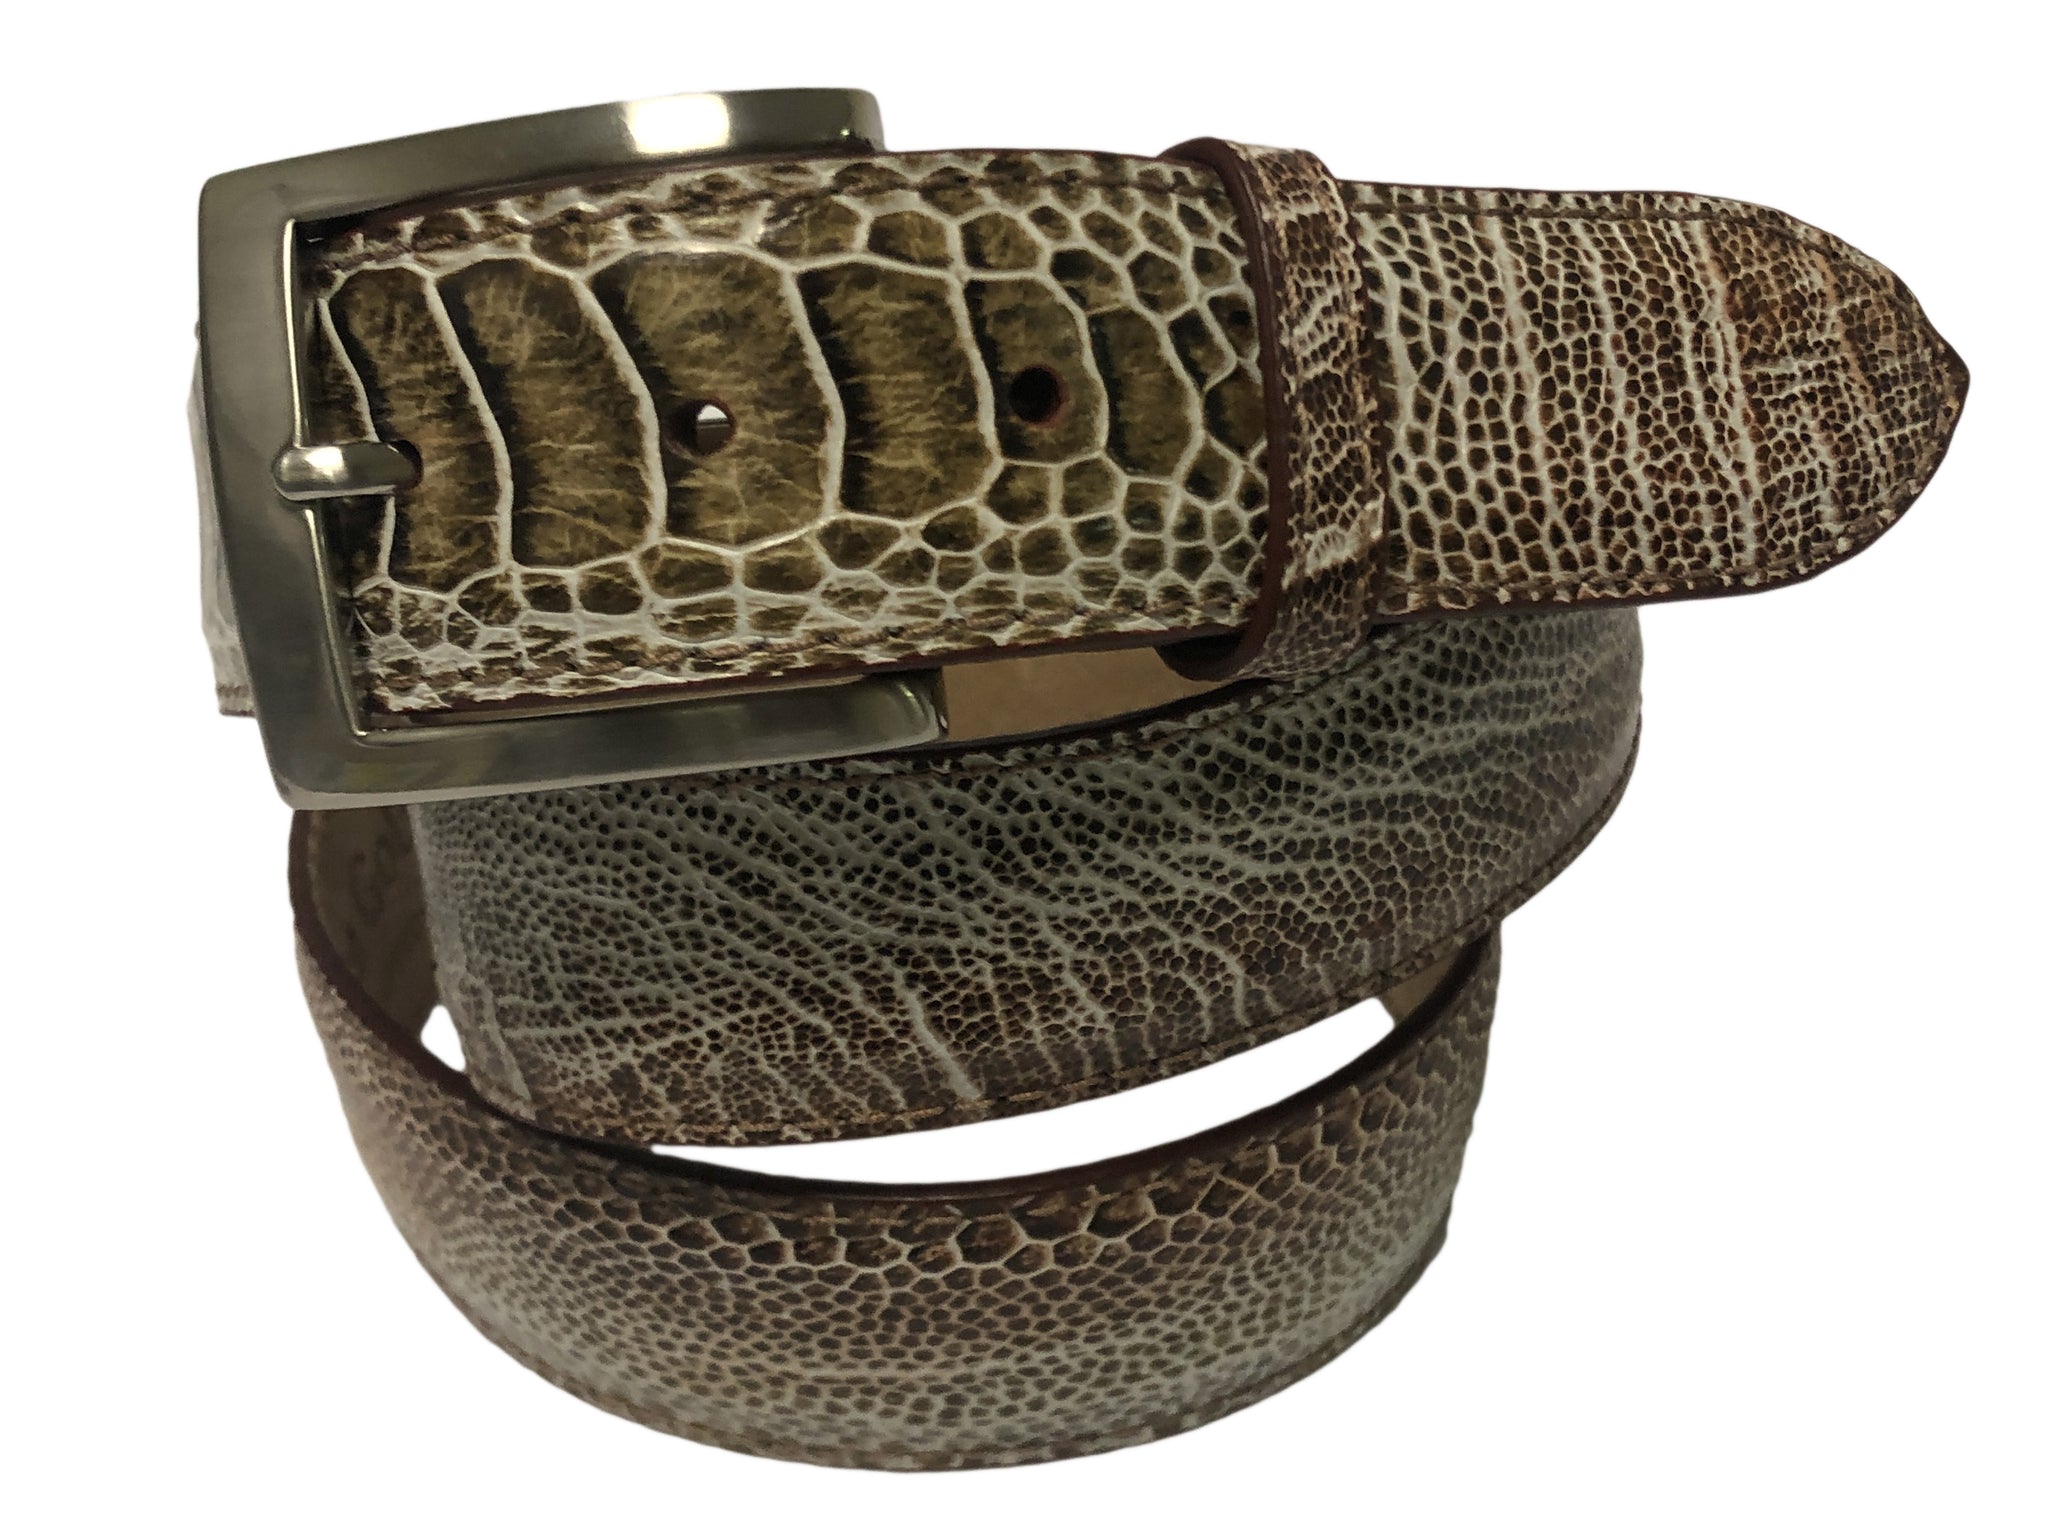 Brown Ostrich Leg Leather Belt Mens Belt Wide 1.5 Inches 